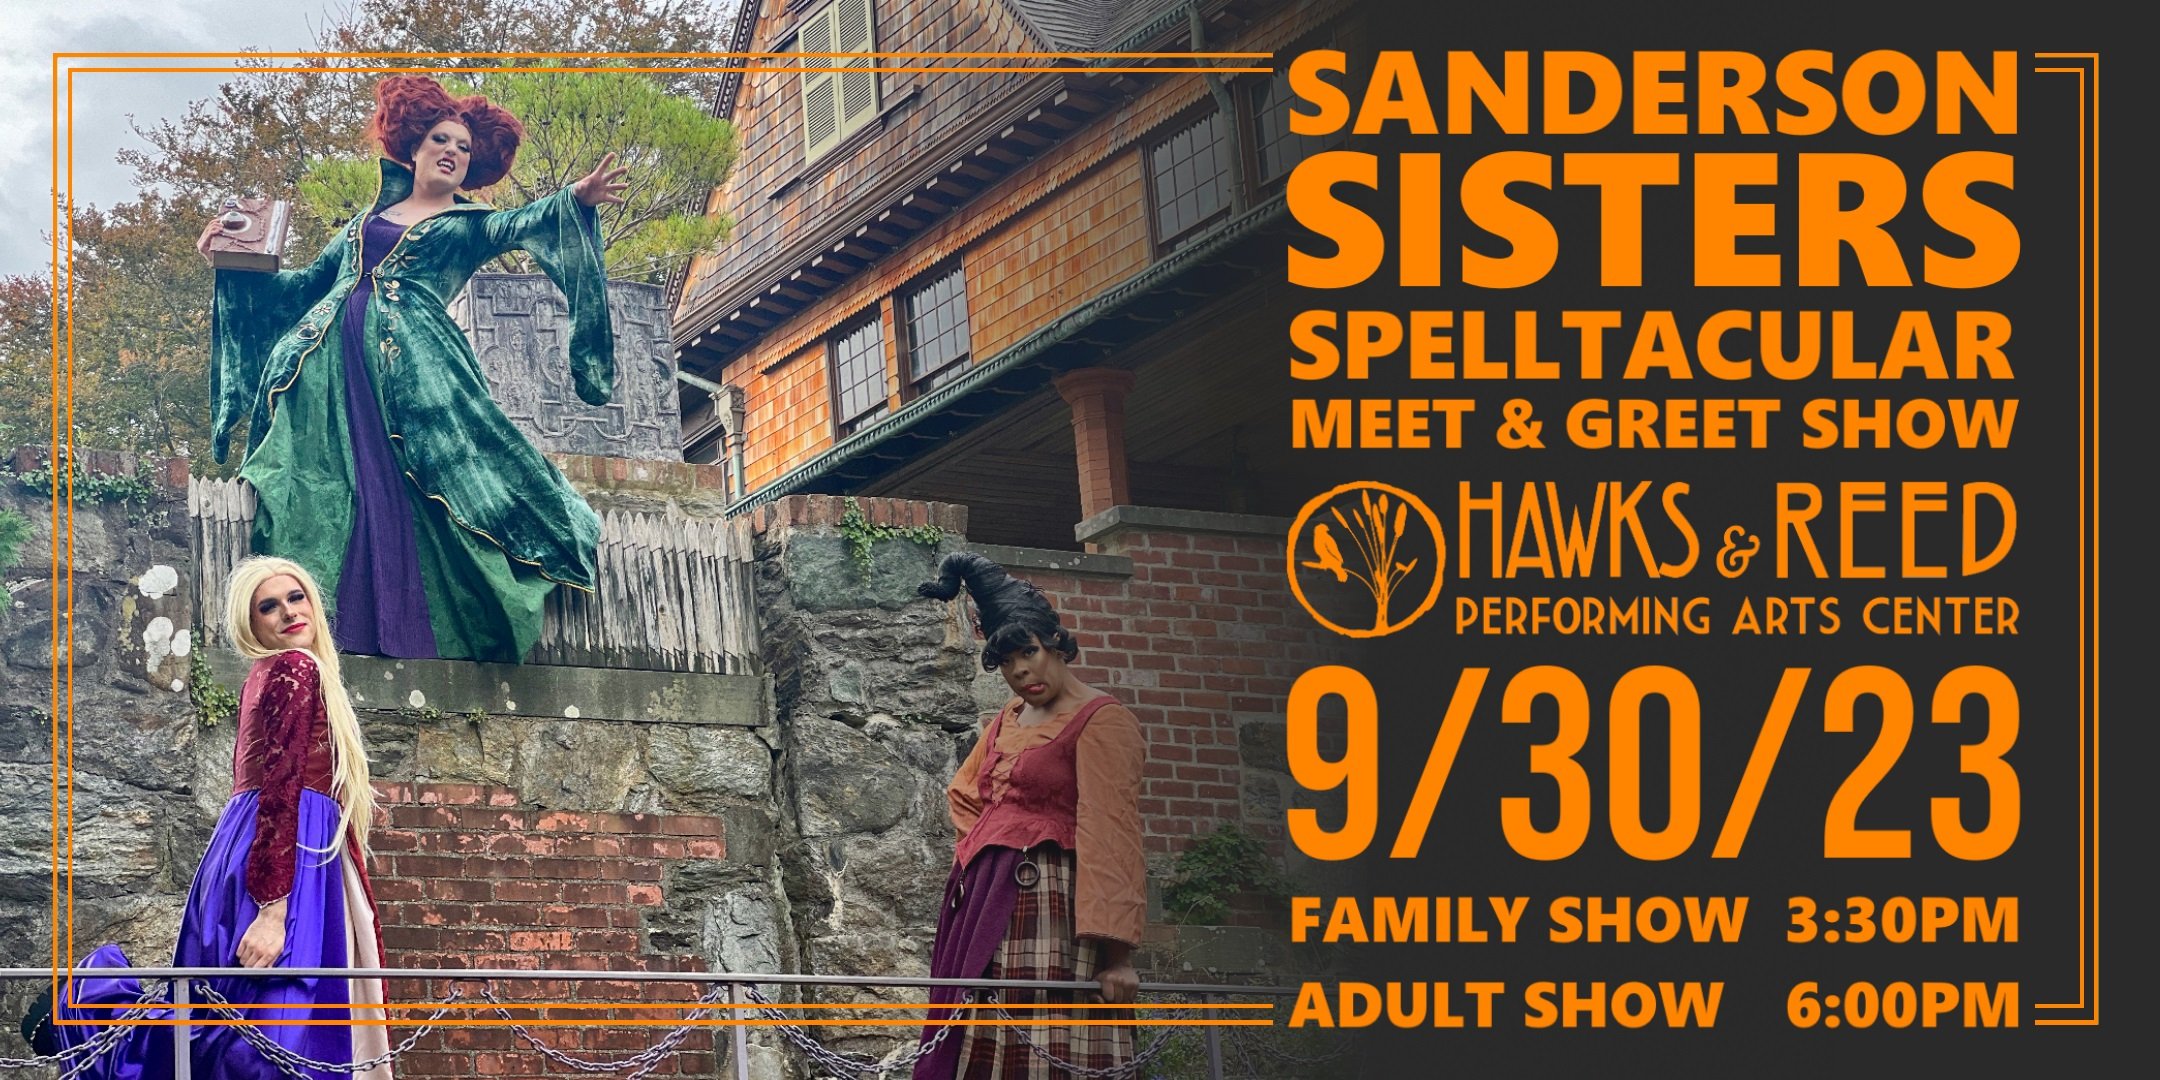 Sanderson Sisters Spelltacular Meet & Greet (Family Show)